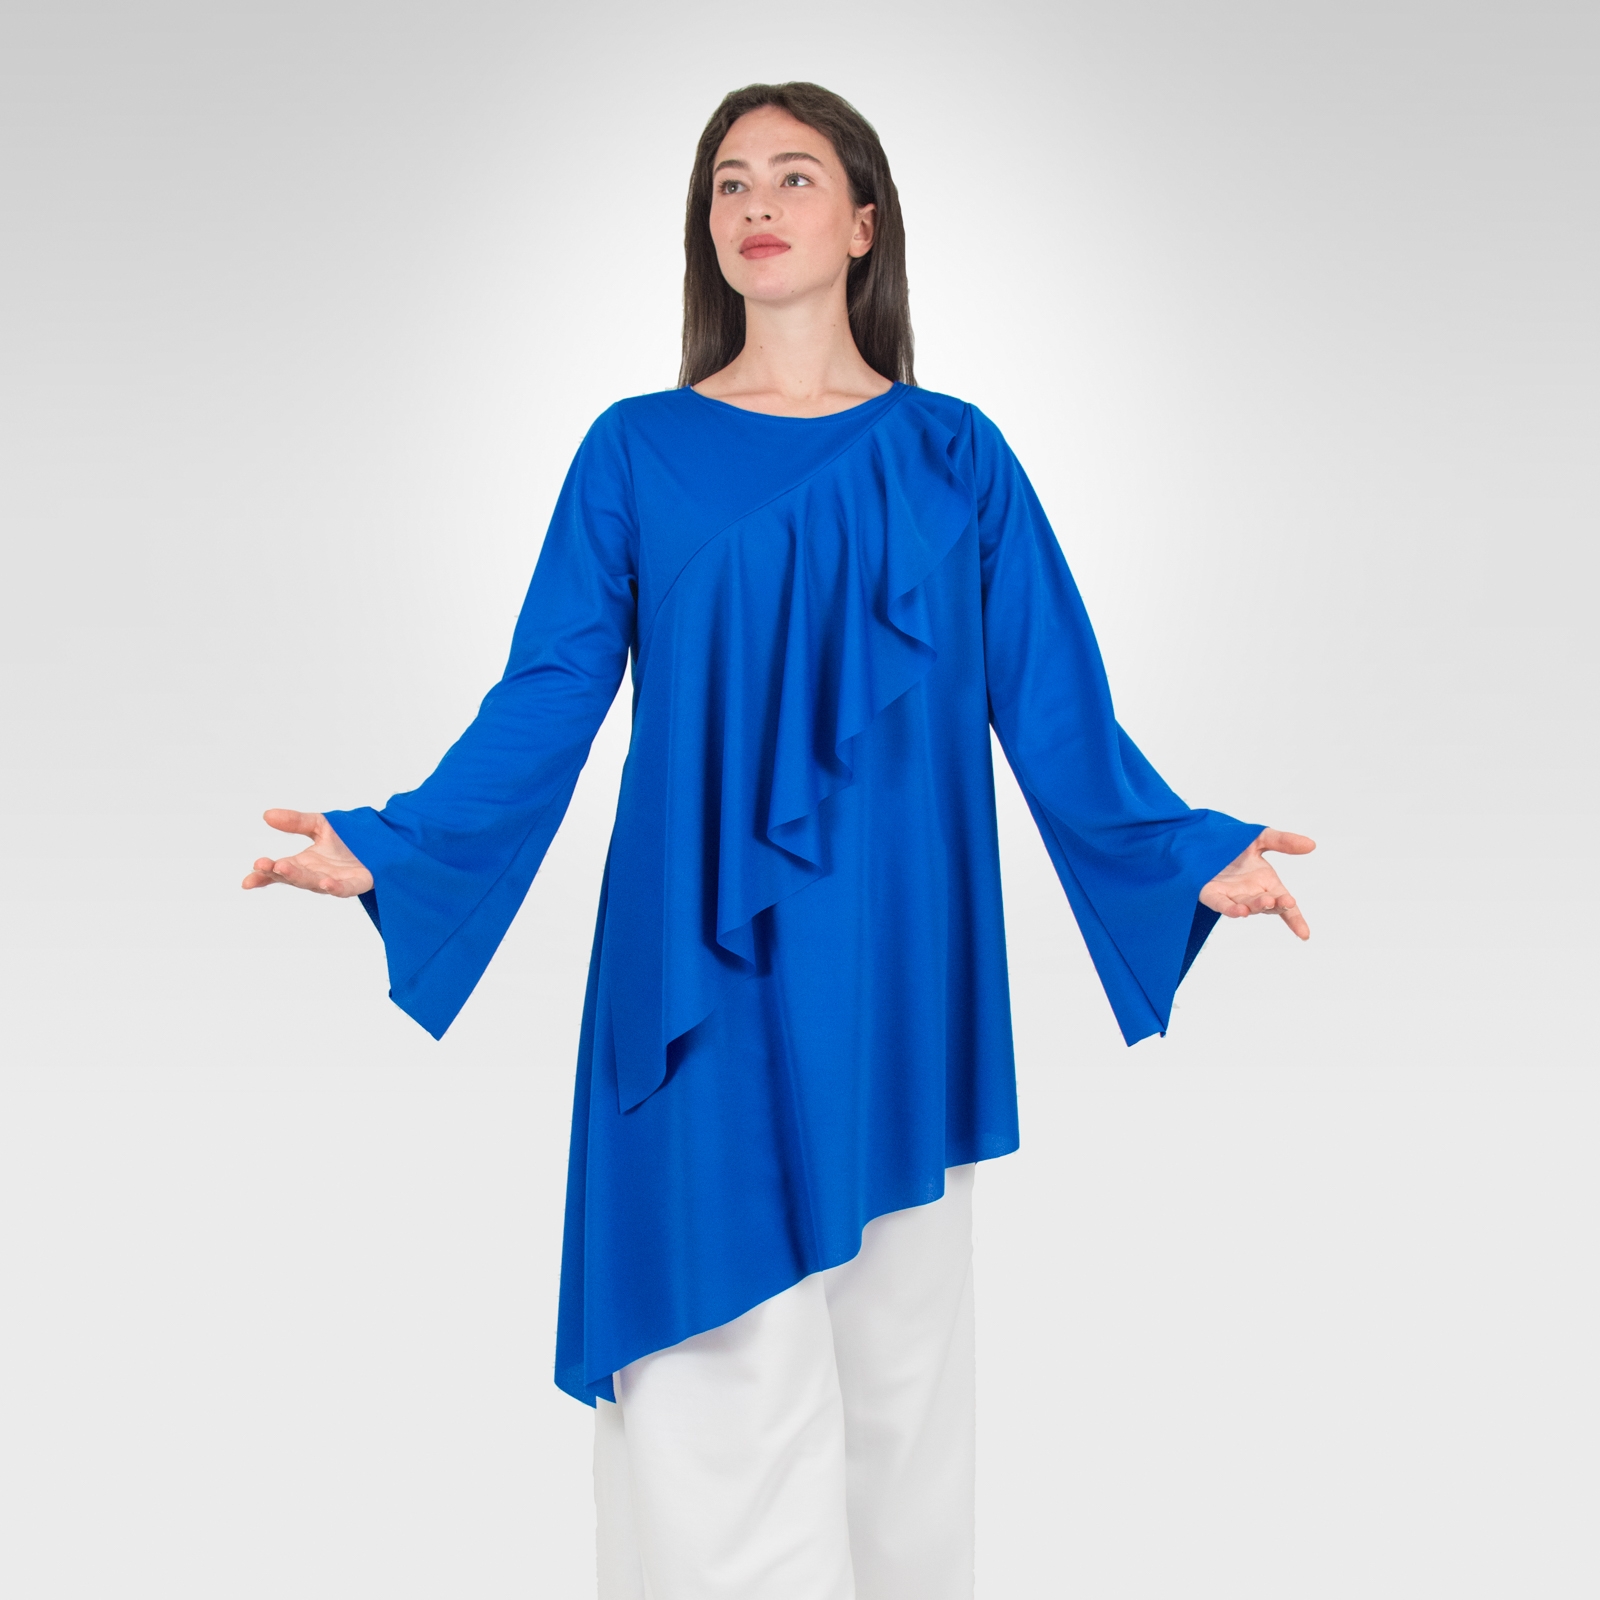 Awaken asymmetrical bell sleeve top - Performing Outfit Design